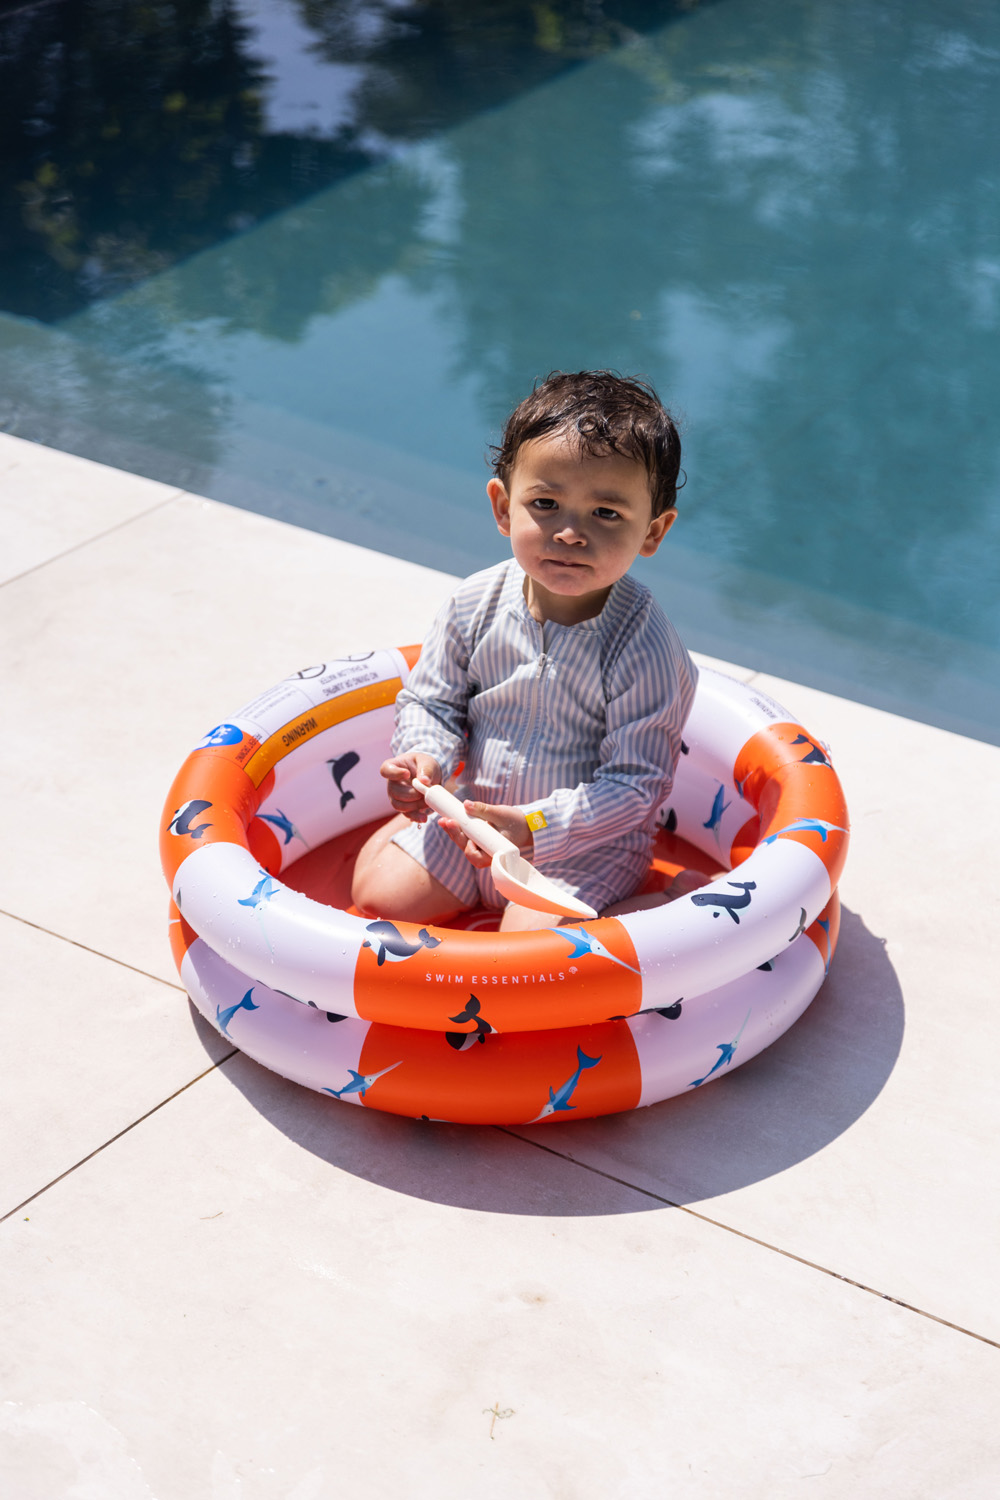 Swim Essentials | Baby Pool 60cm | Red White Whale